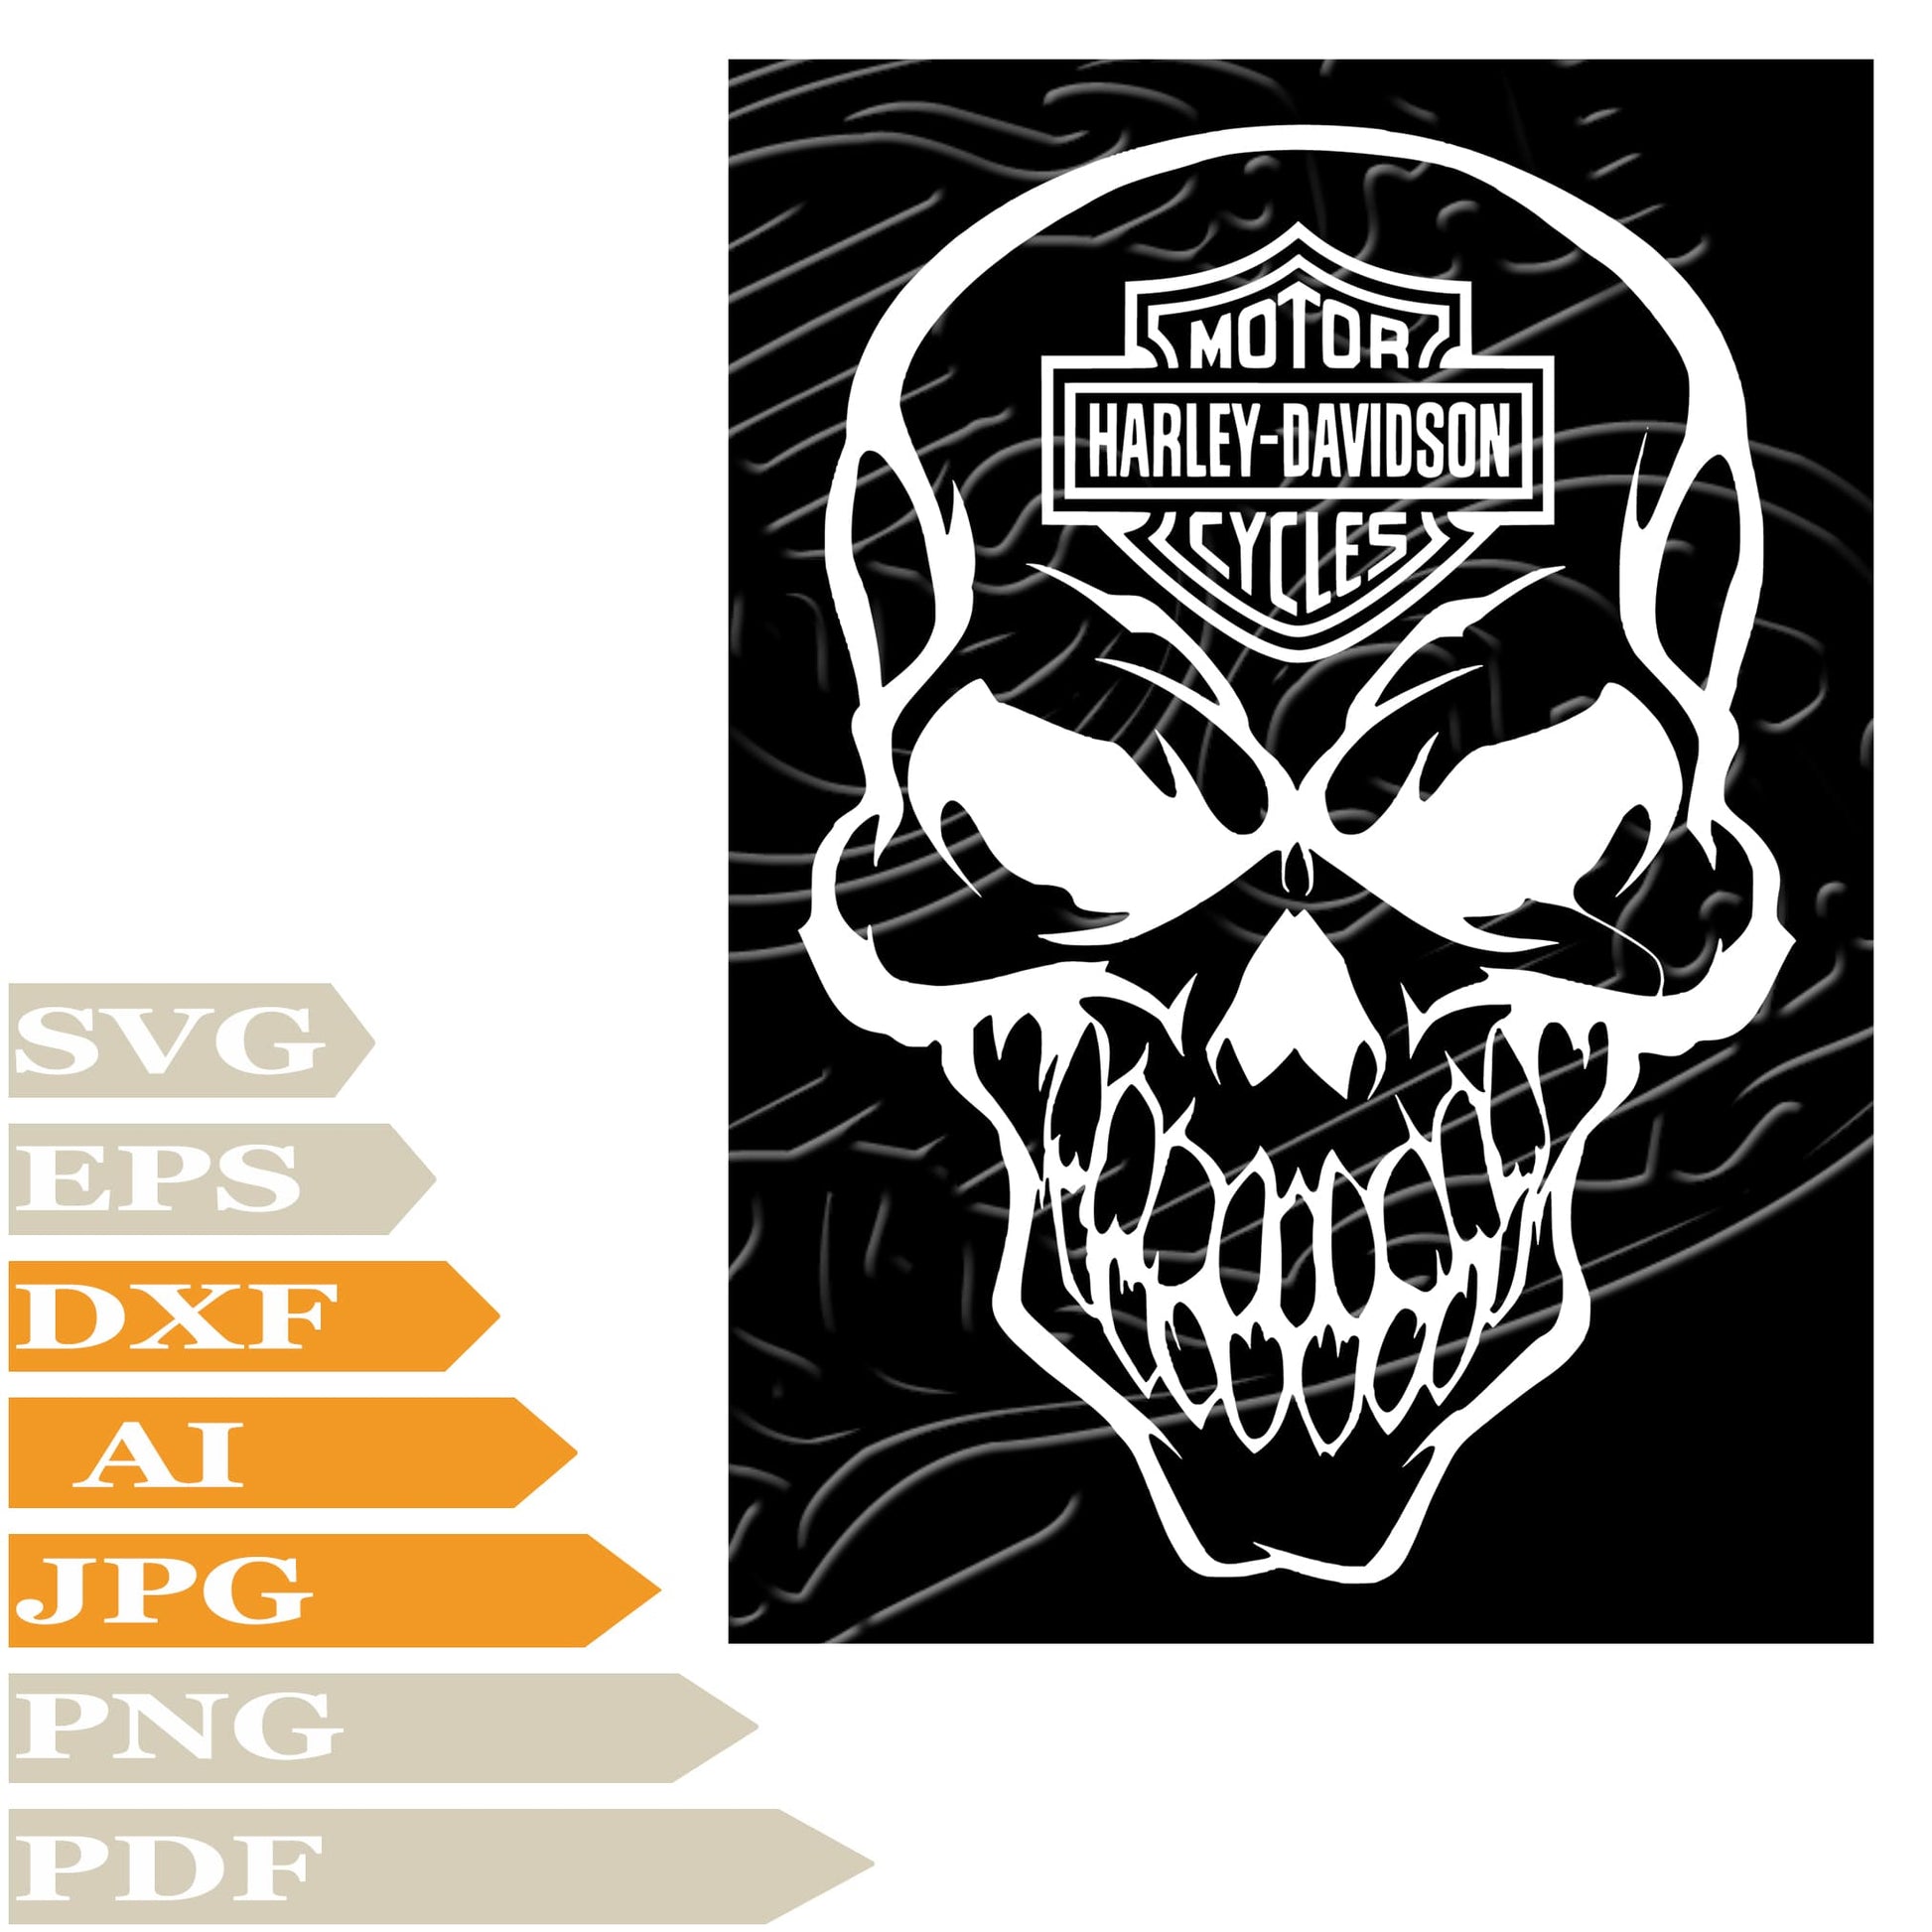 Skull Harley Davidson,Harley Davidson Logo Svg File, Image Cut, Png, For Tattoo, Silhouette, Digital Vector Download, Cut File, Clipart, For Cricut